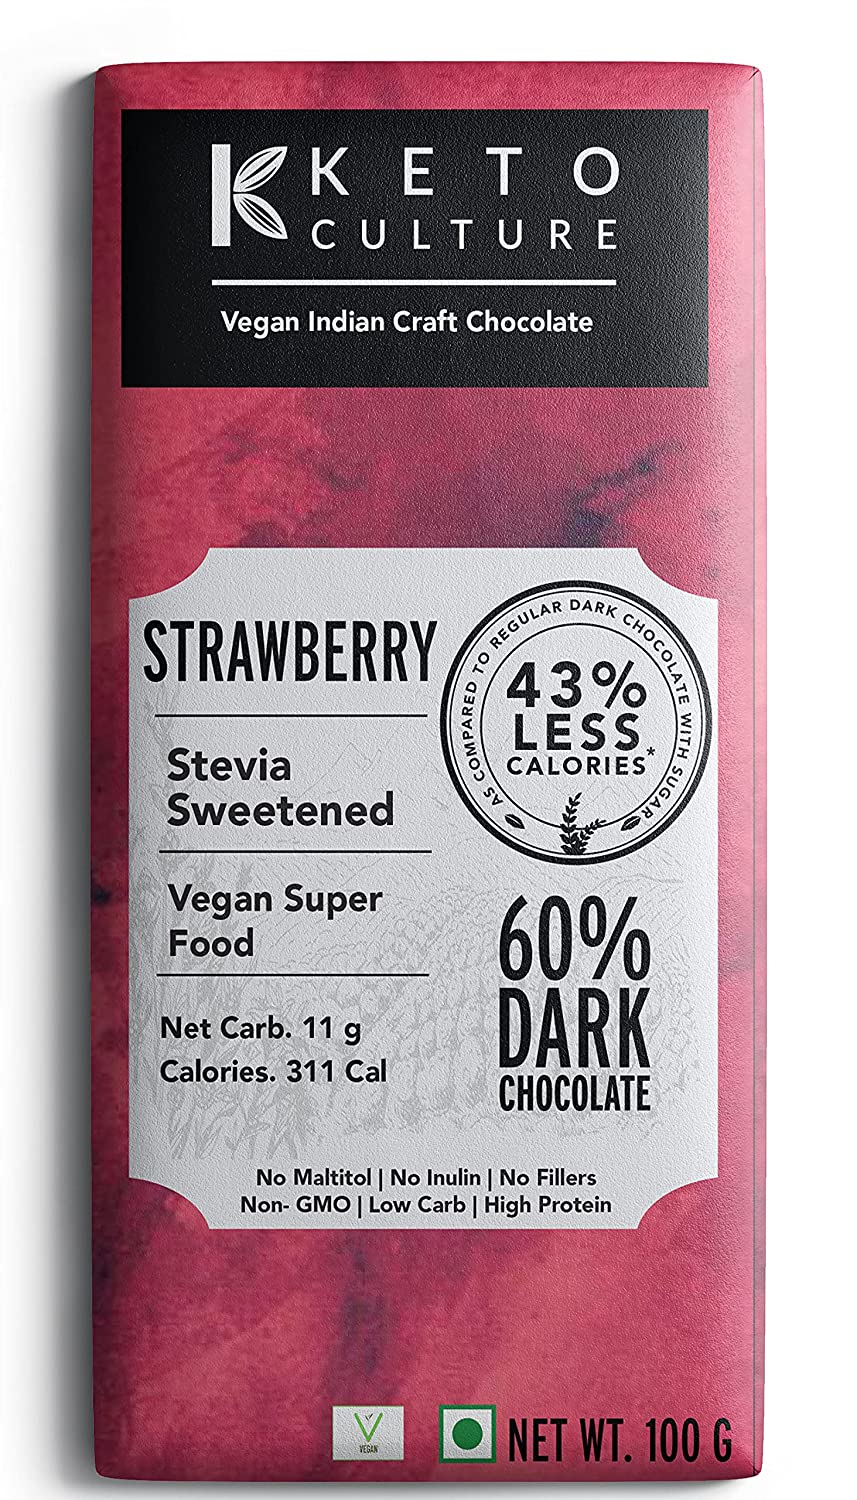 Keto Culture Strawberry Vegan Dark Chocolate Image